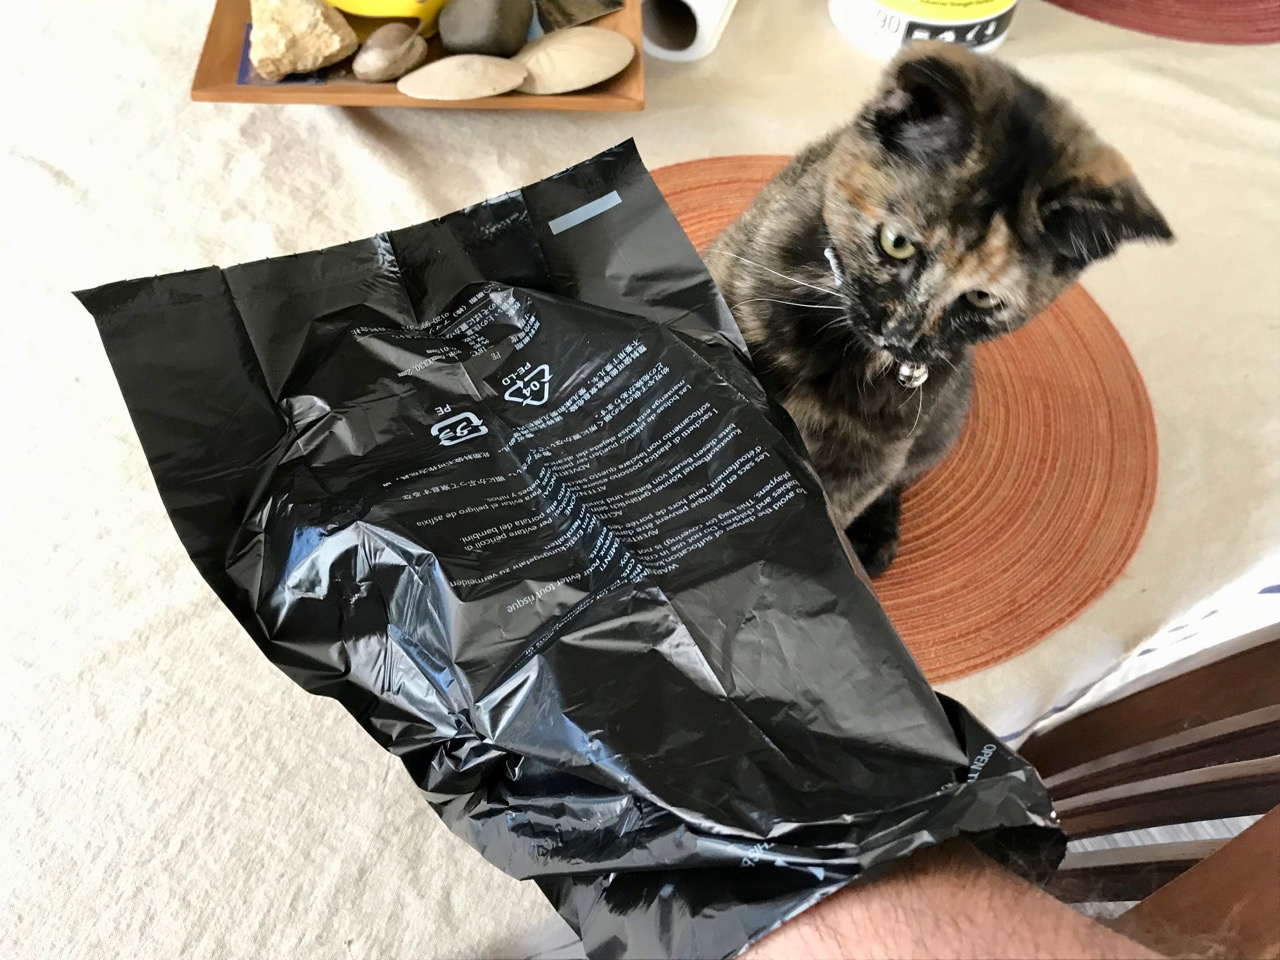 My cat, Pwykka, watches my bag demonstration.